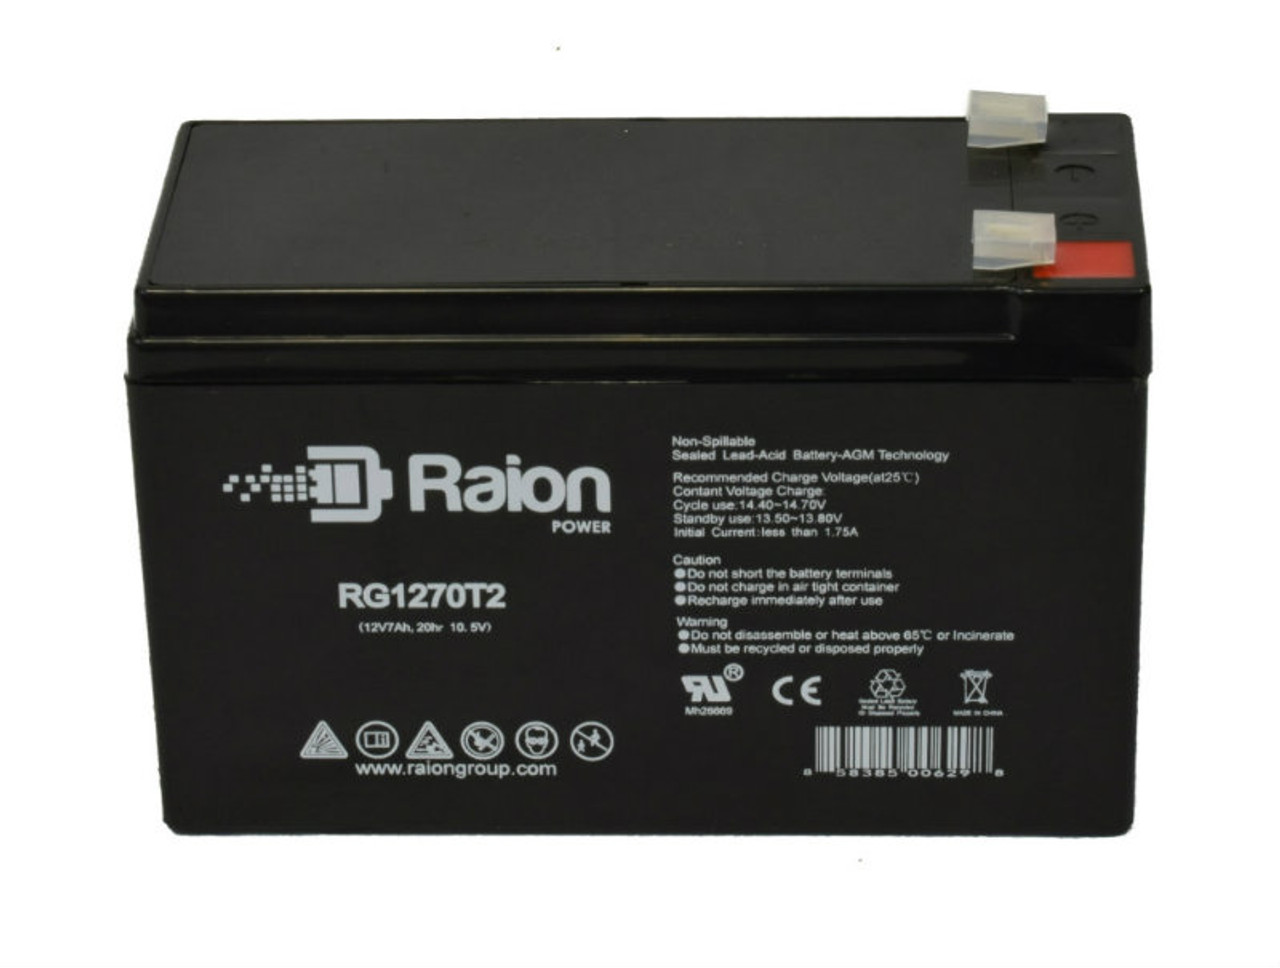 Raion Power RG1270T1 12V 7Ah Lead Acid Battery for Humminbird 383c Combo Portable Fish Finder